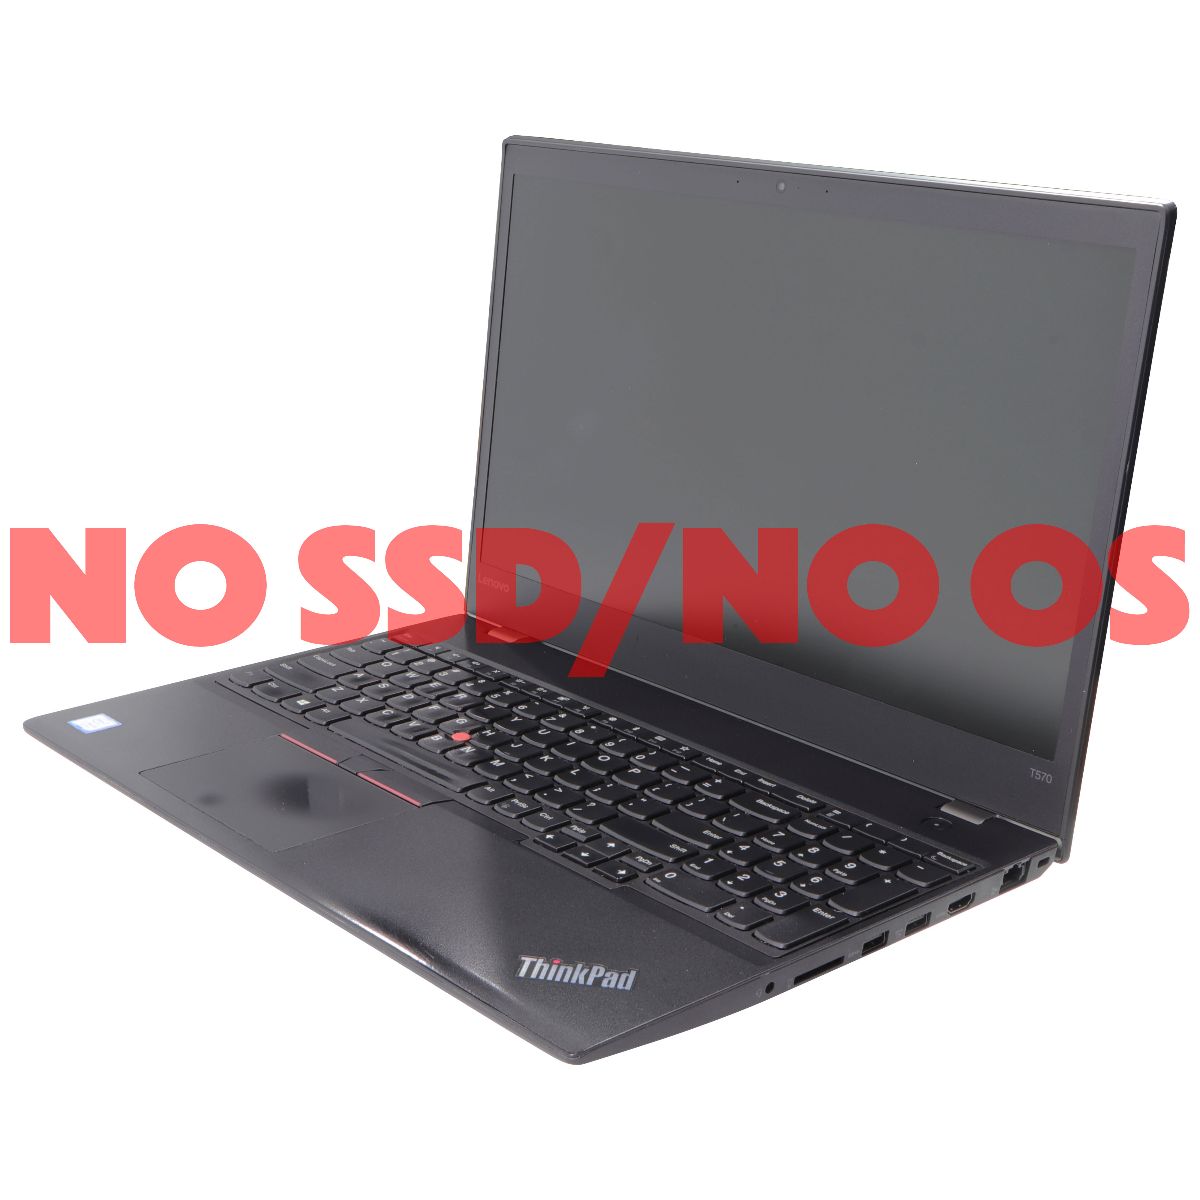 Lenovo ThinkPad T570 (15.6-in) FHD Laptop i5-7200U/32GB RAM - No SSD / No OS* Laptops - PC Laptops & Netbooks Lenovo    - Simple Cell Bulk Wholesale Pricing - USA Seller